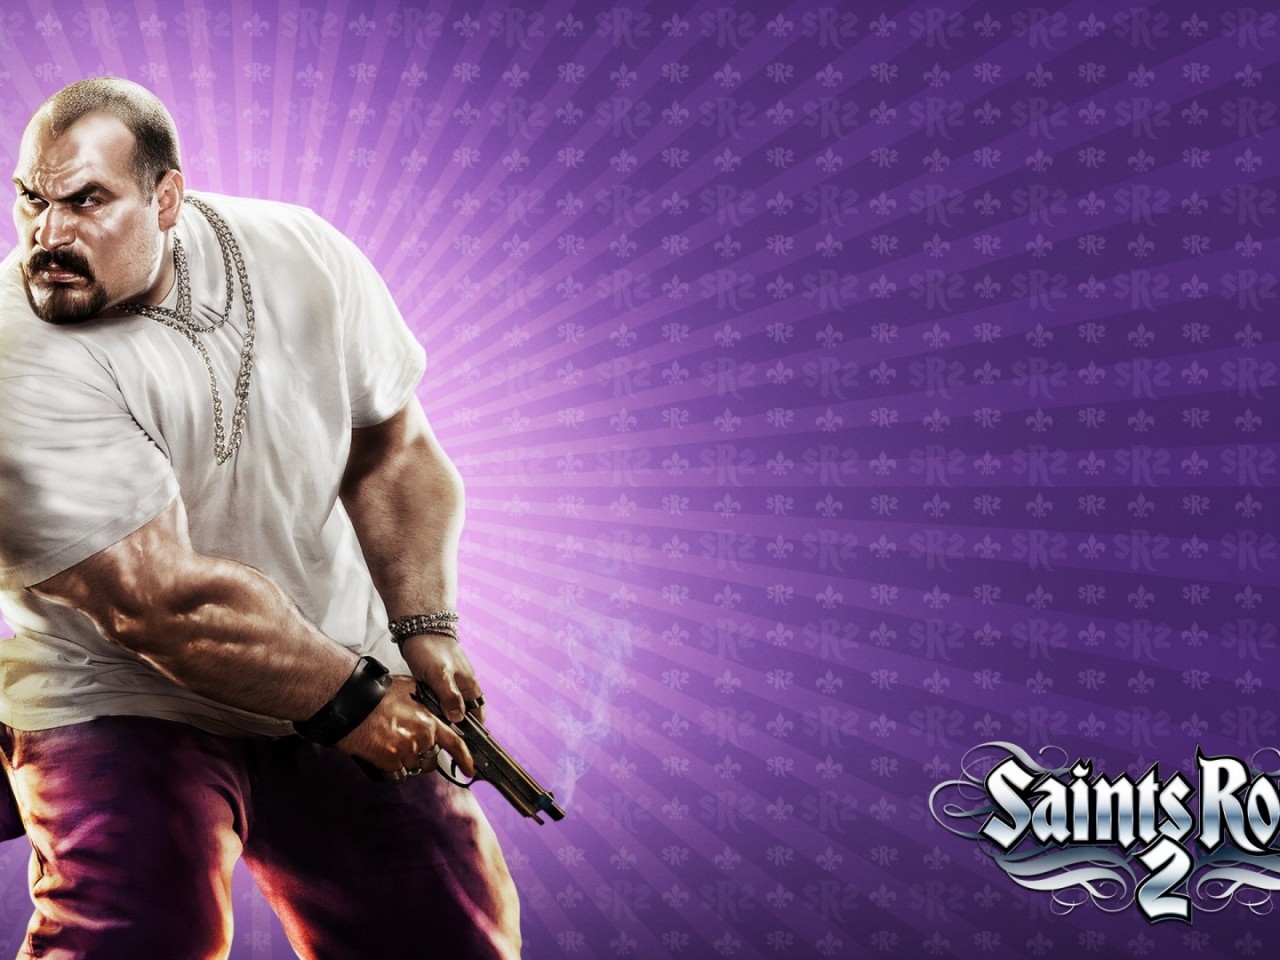 Saints Row 2 News, Guides, Walkthrough, Screenshots, and Reviews -  GameRevolution